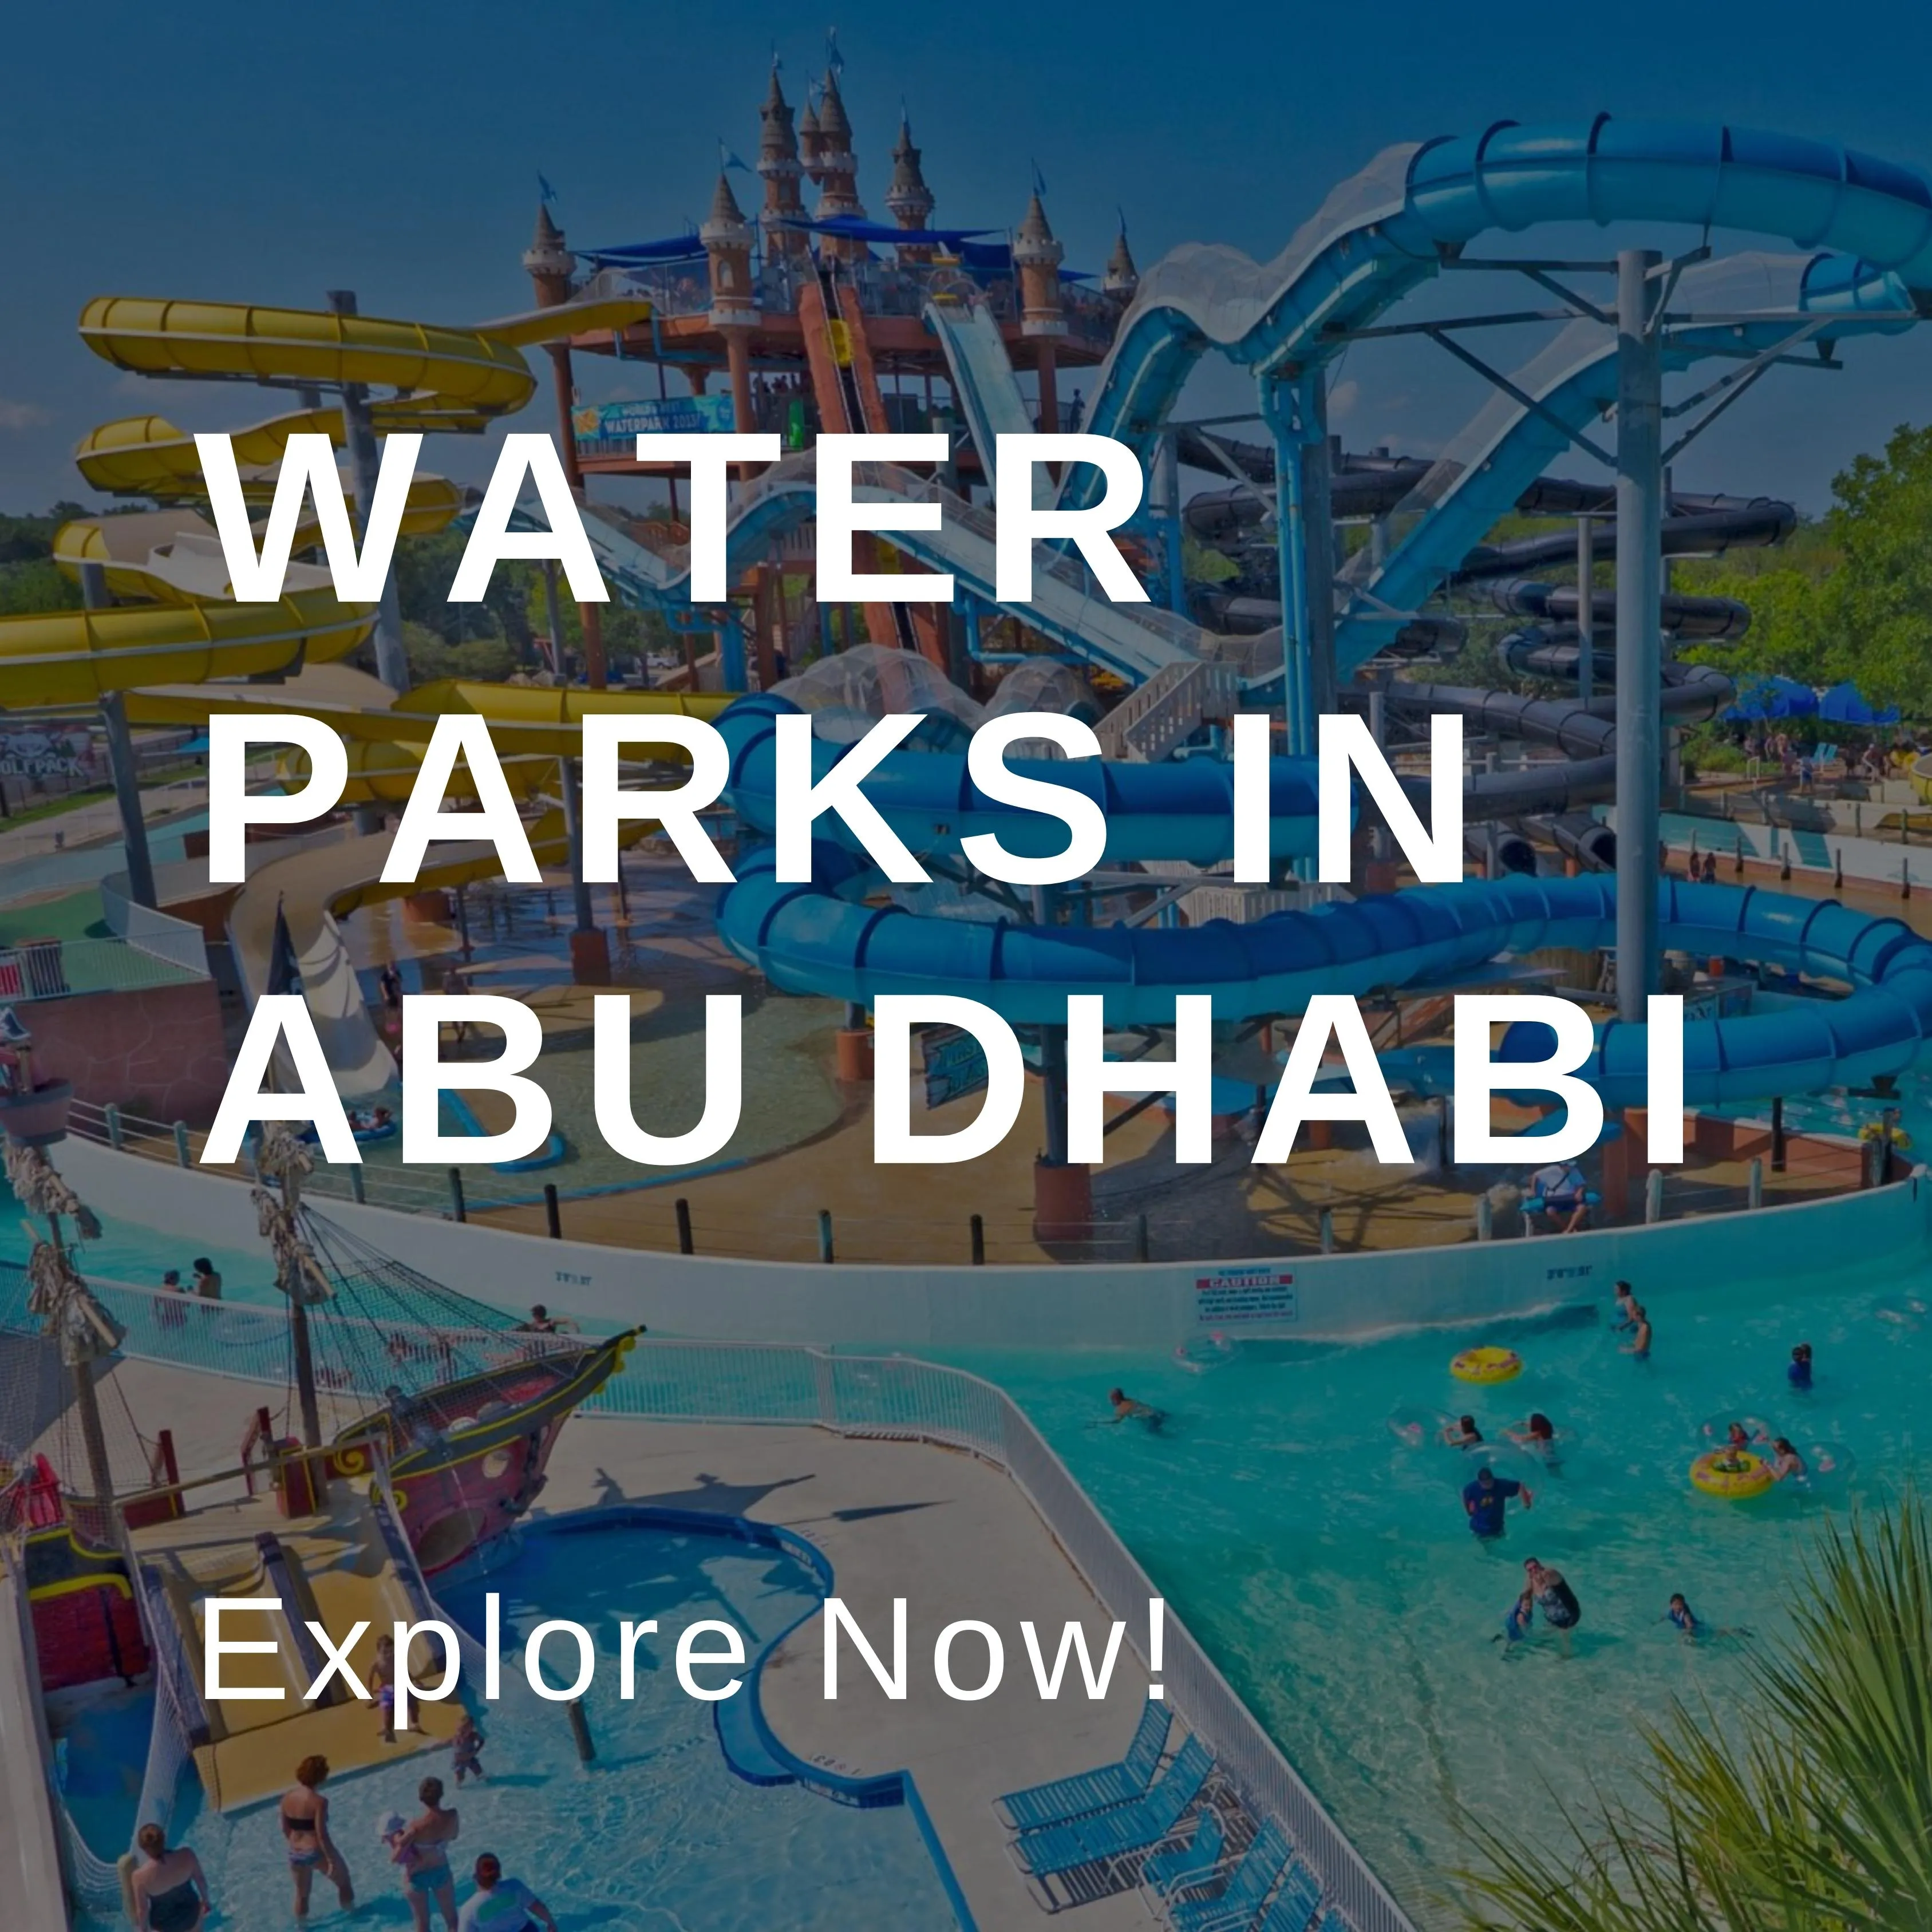 WATER PARKS IN ABU DHABI